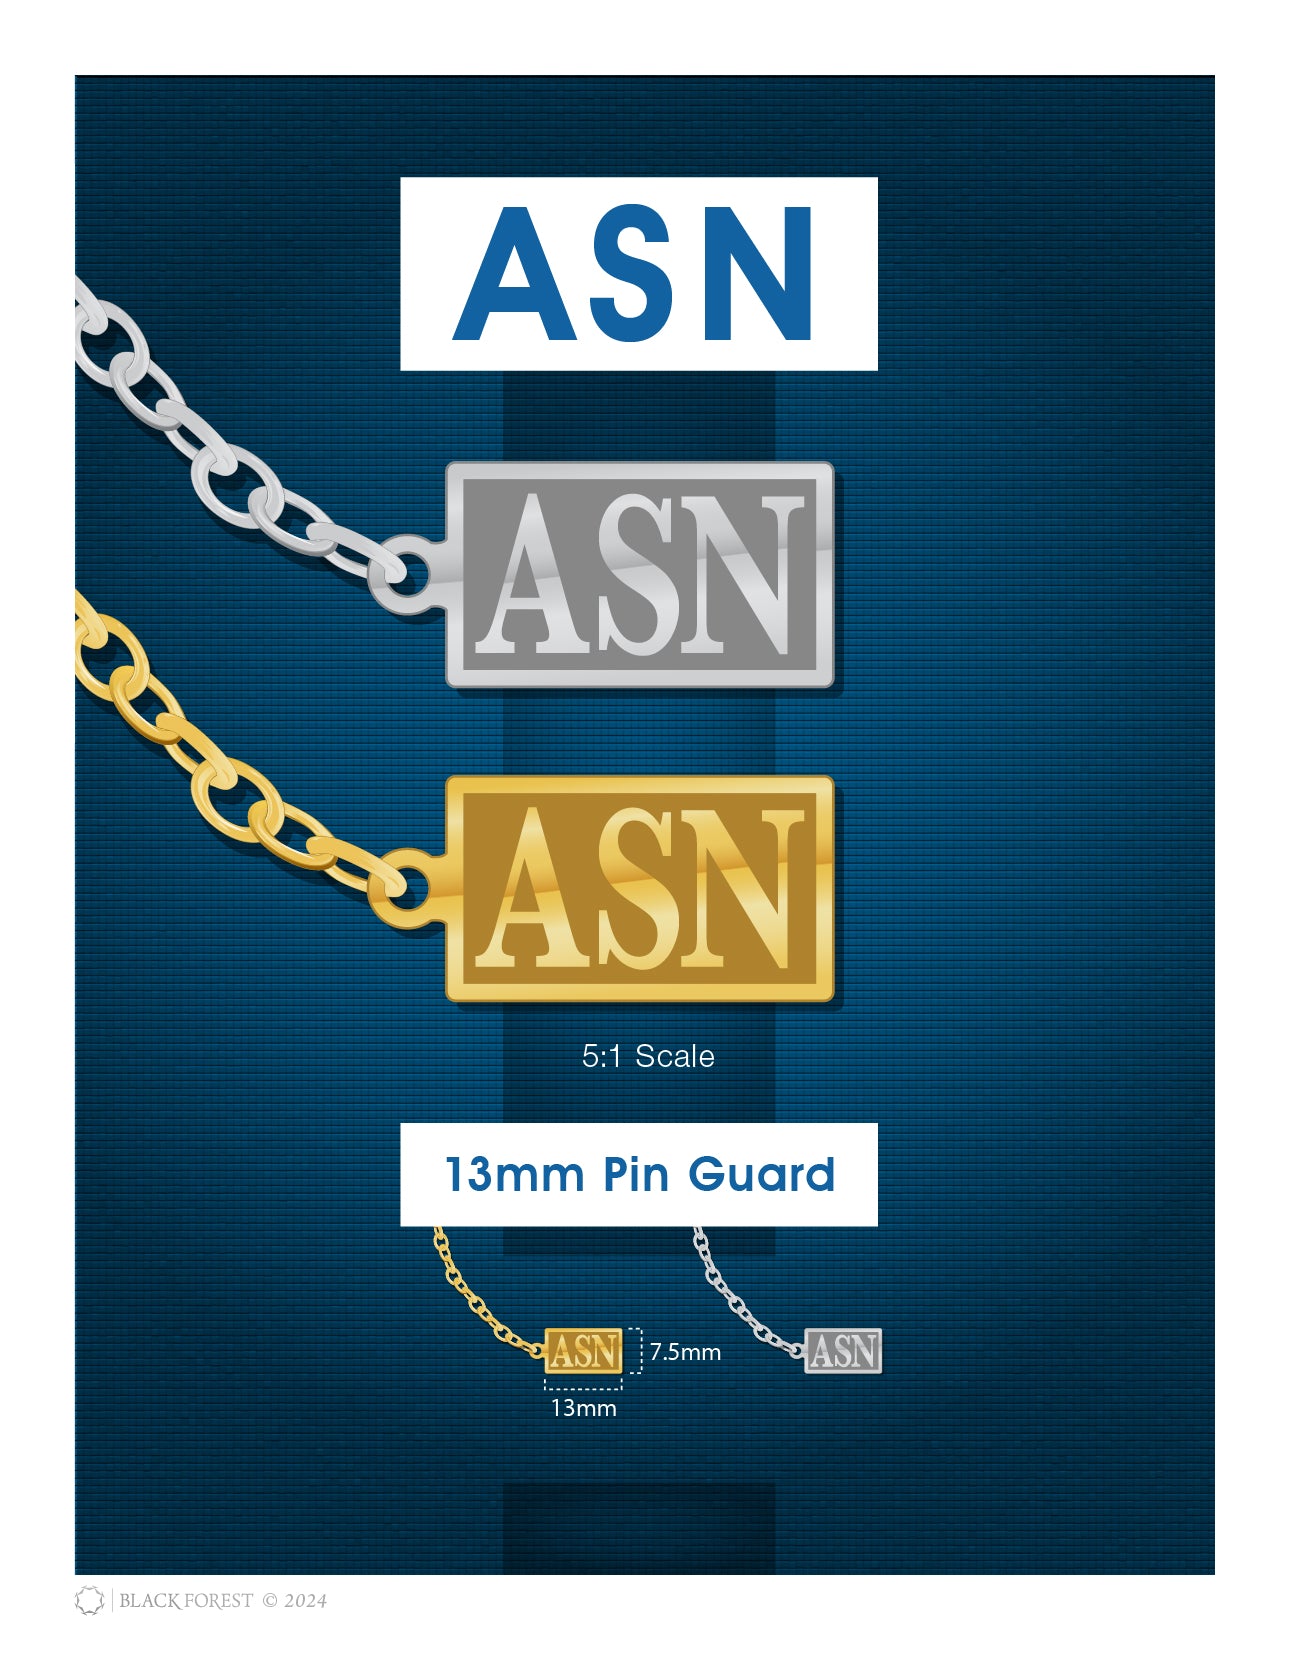 ASN Pin Guard